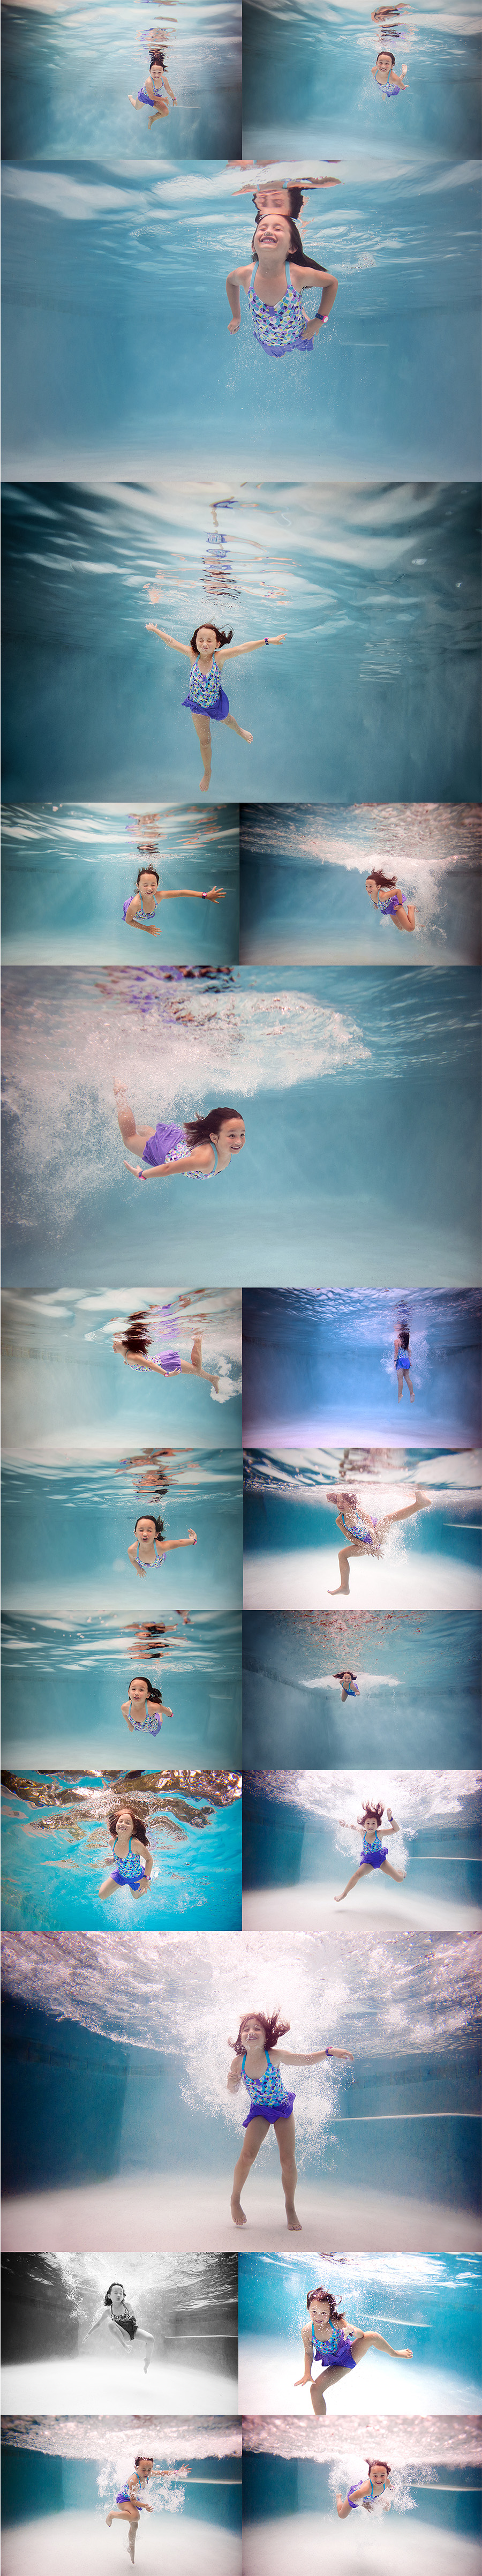 Houston Kids Underwater Photography